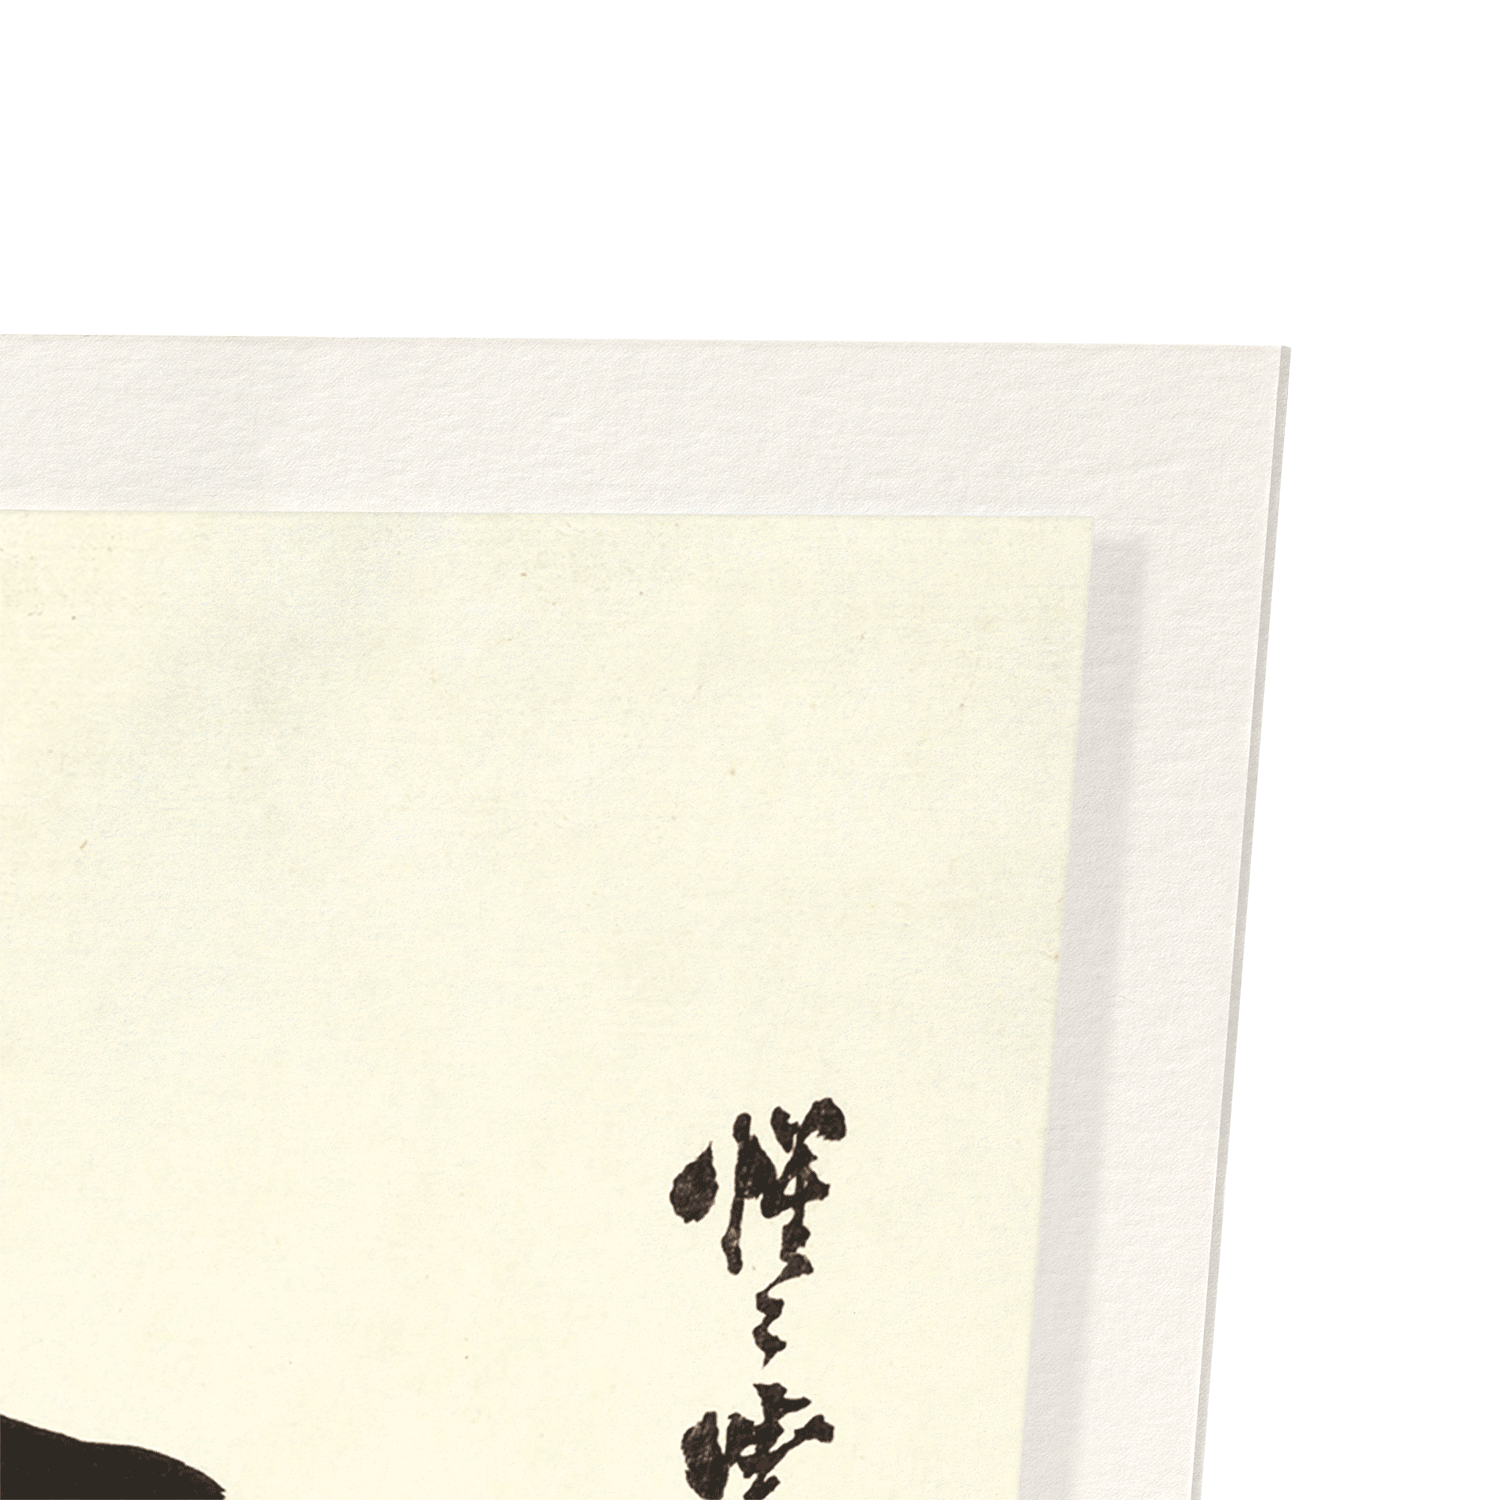 CROW (C.1868): Japanese Art Print